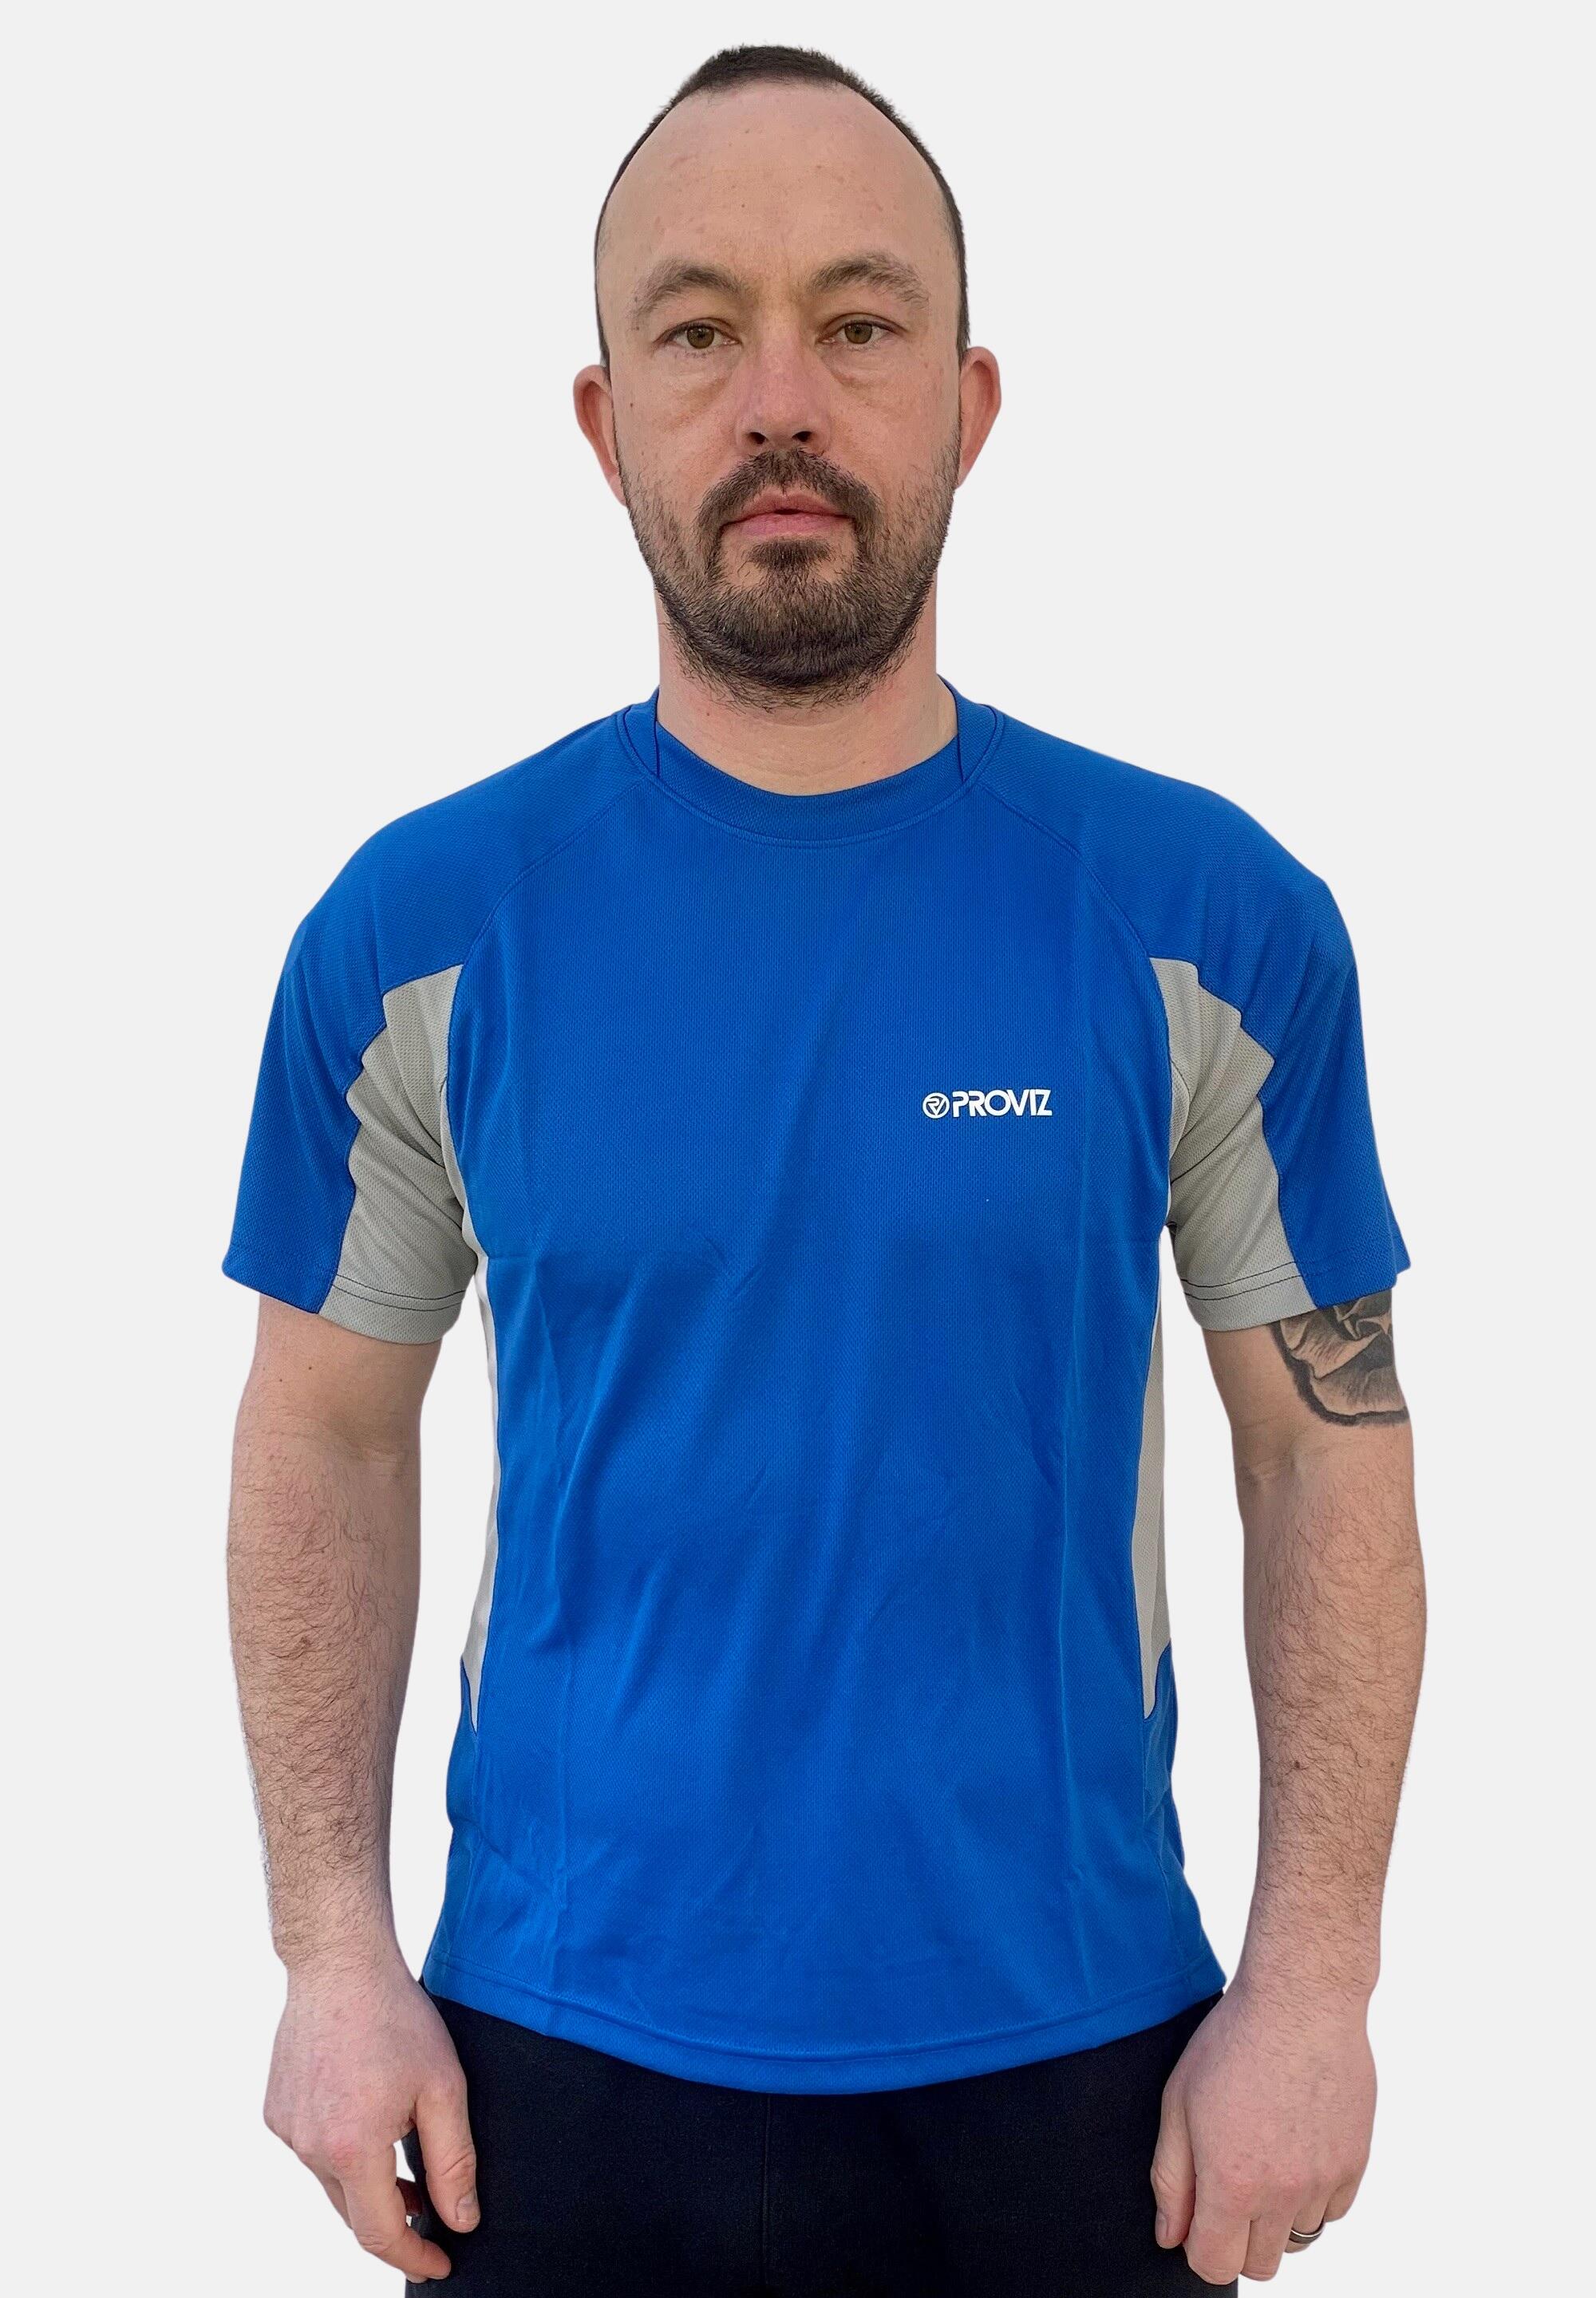 Proviz Classic Mens Sports T-Shirt Short Sleeve Reflective Activewear Top 3/7